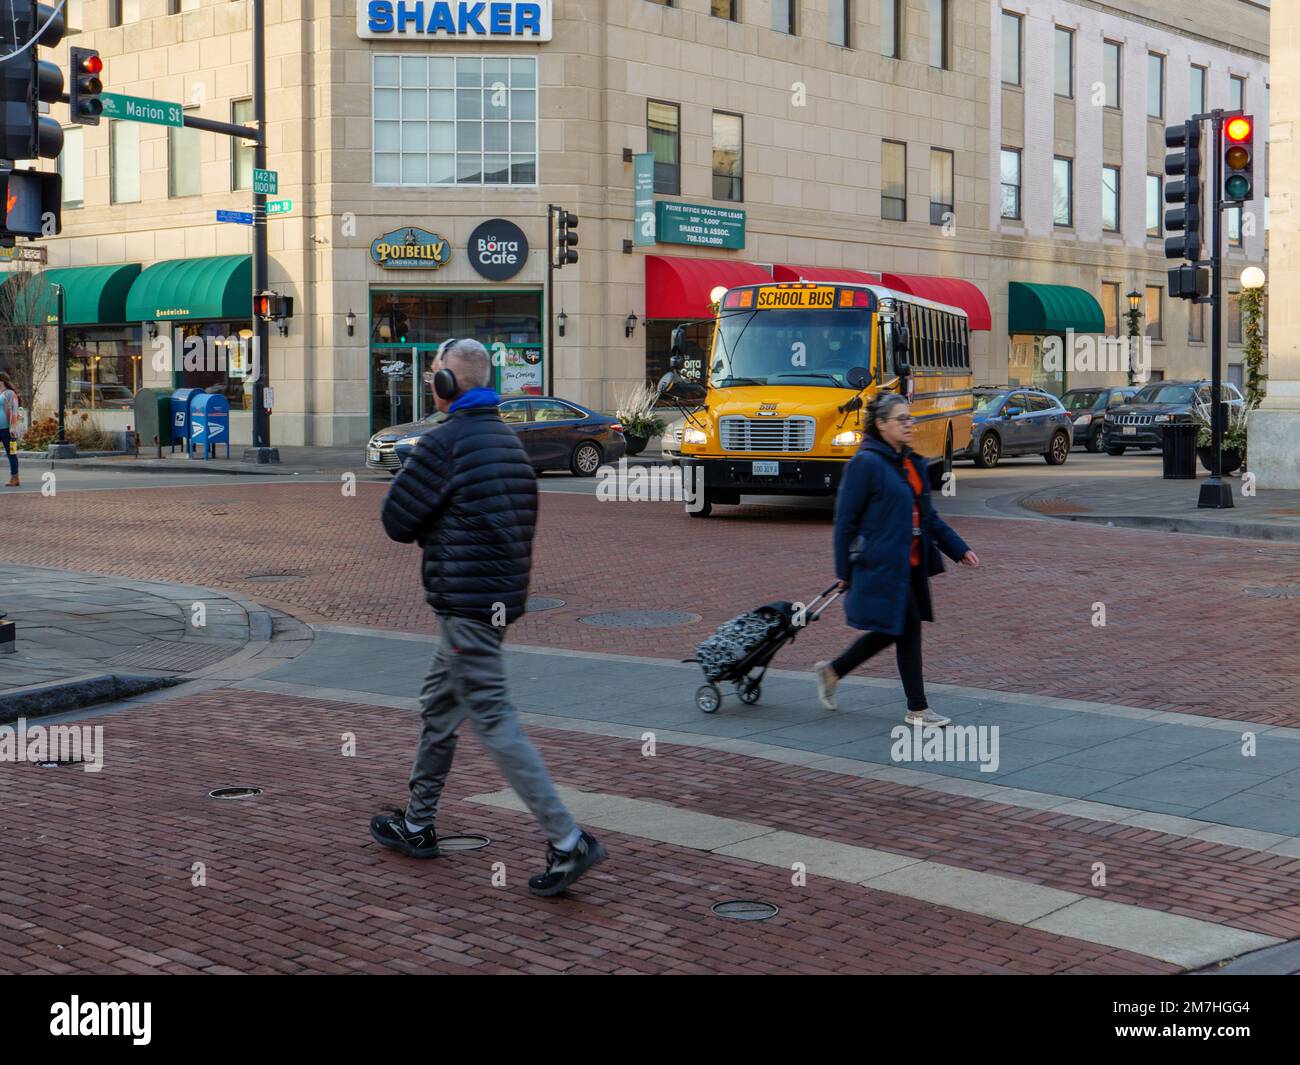 School bus and pedestrian crossing. Stock Photo